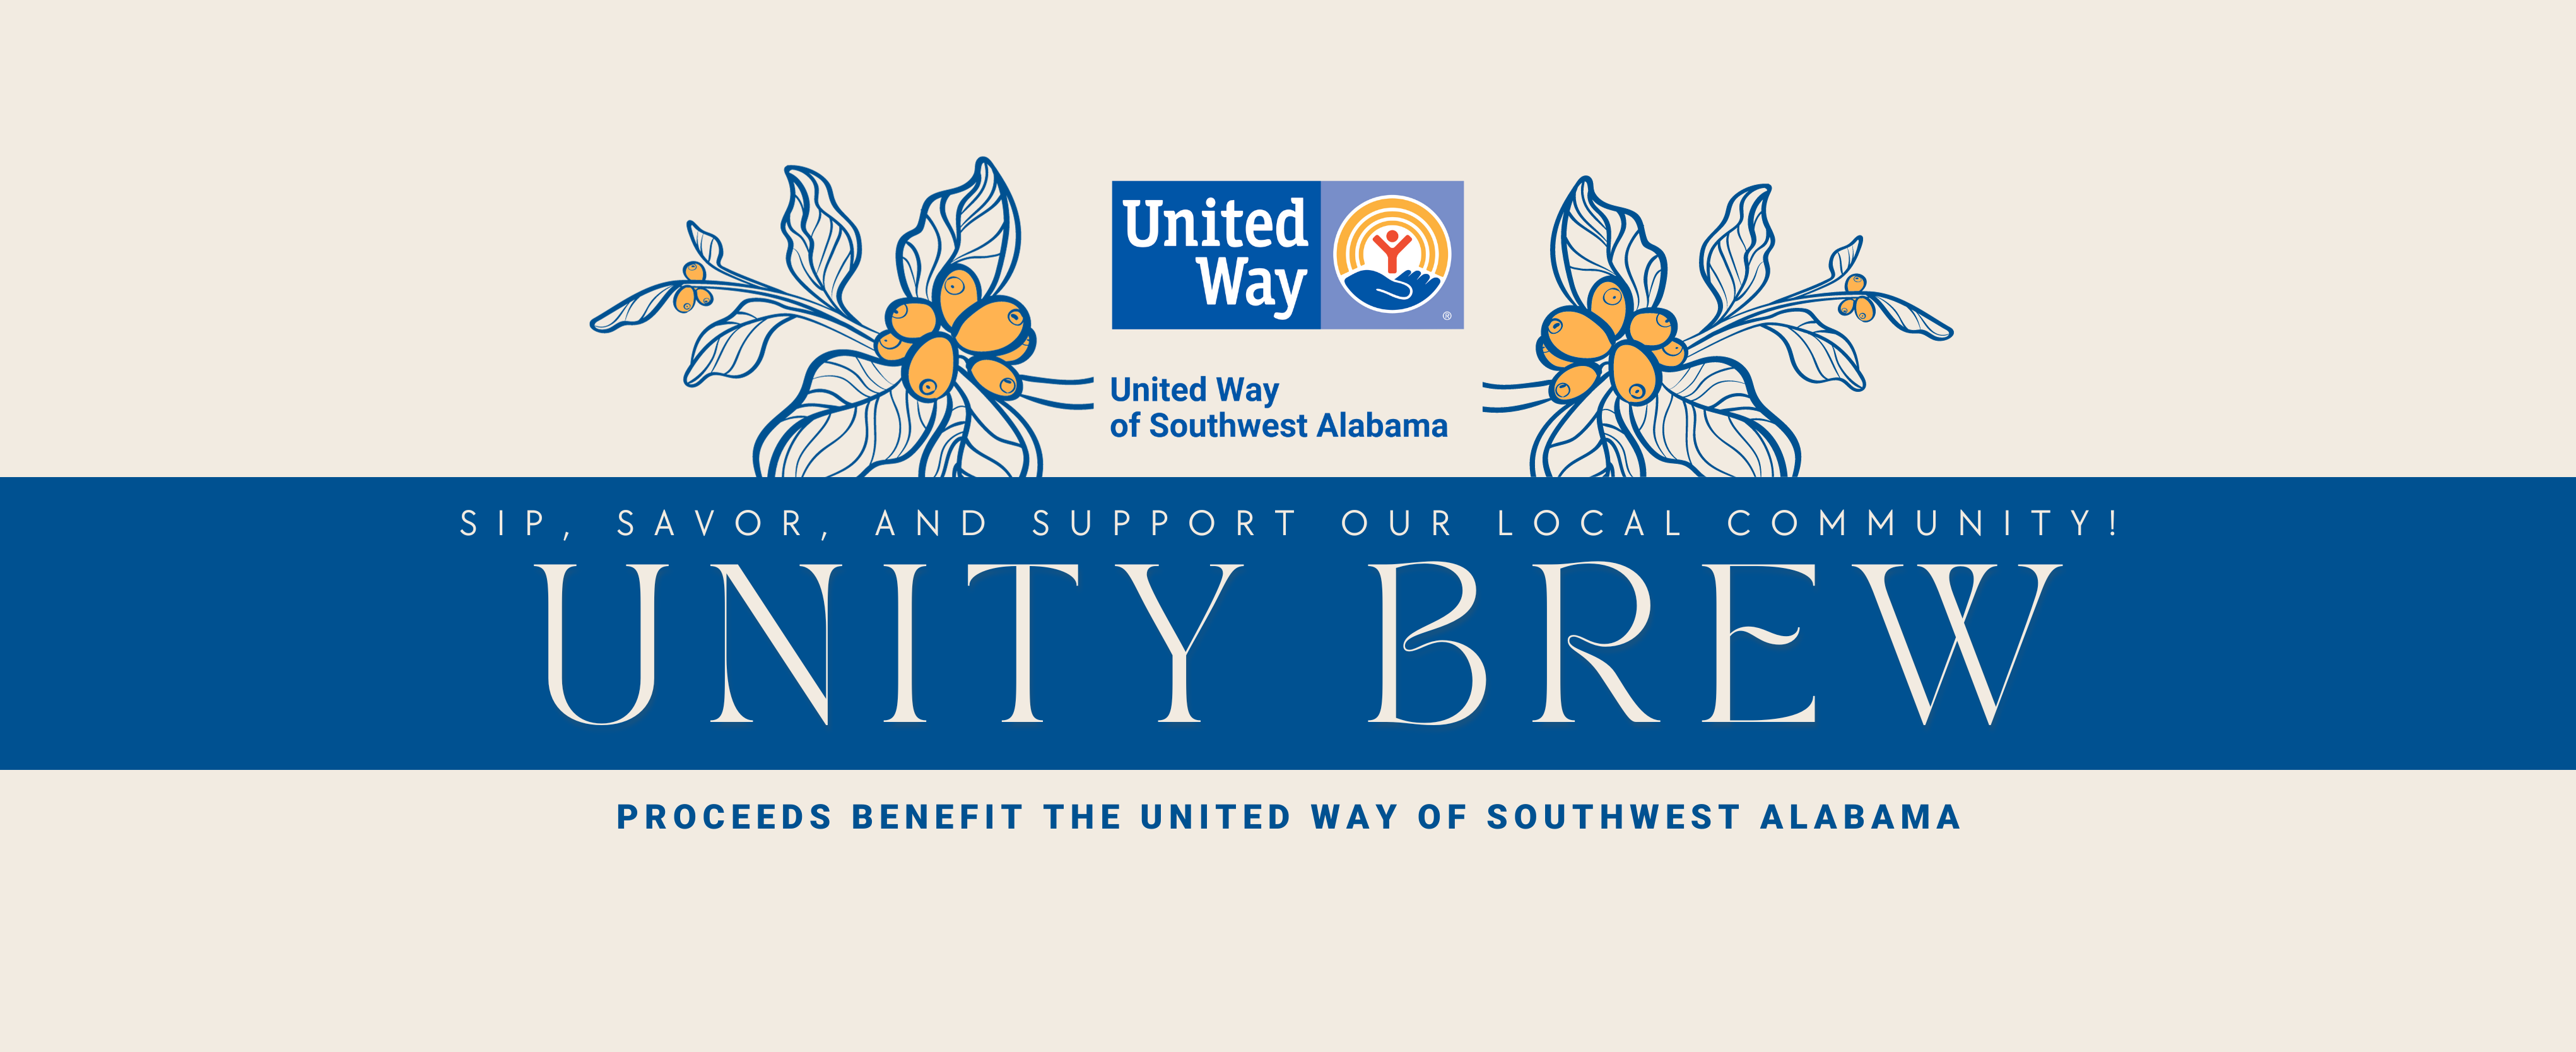 United Way of Southwest Alabama Unity Brew. Donate get your Unity Brew today.